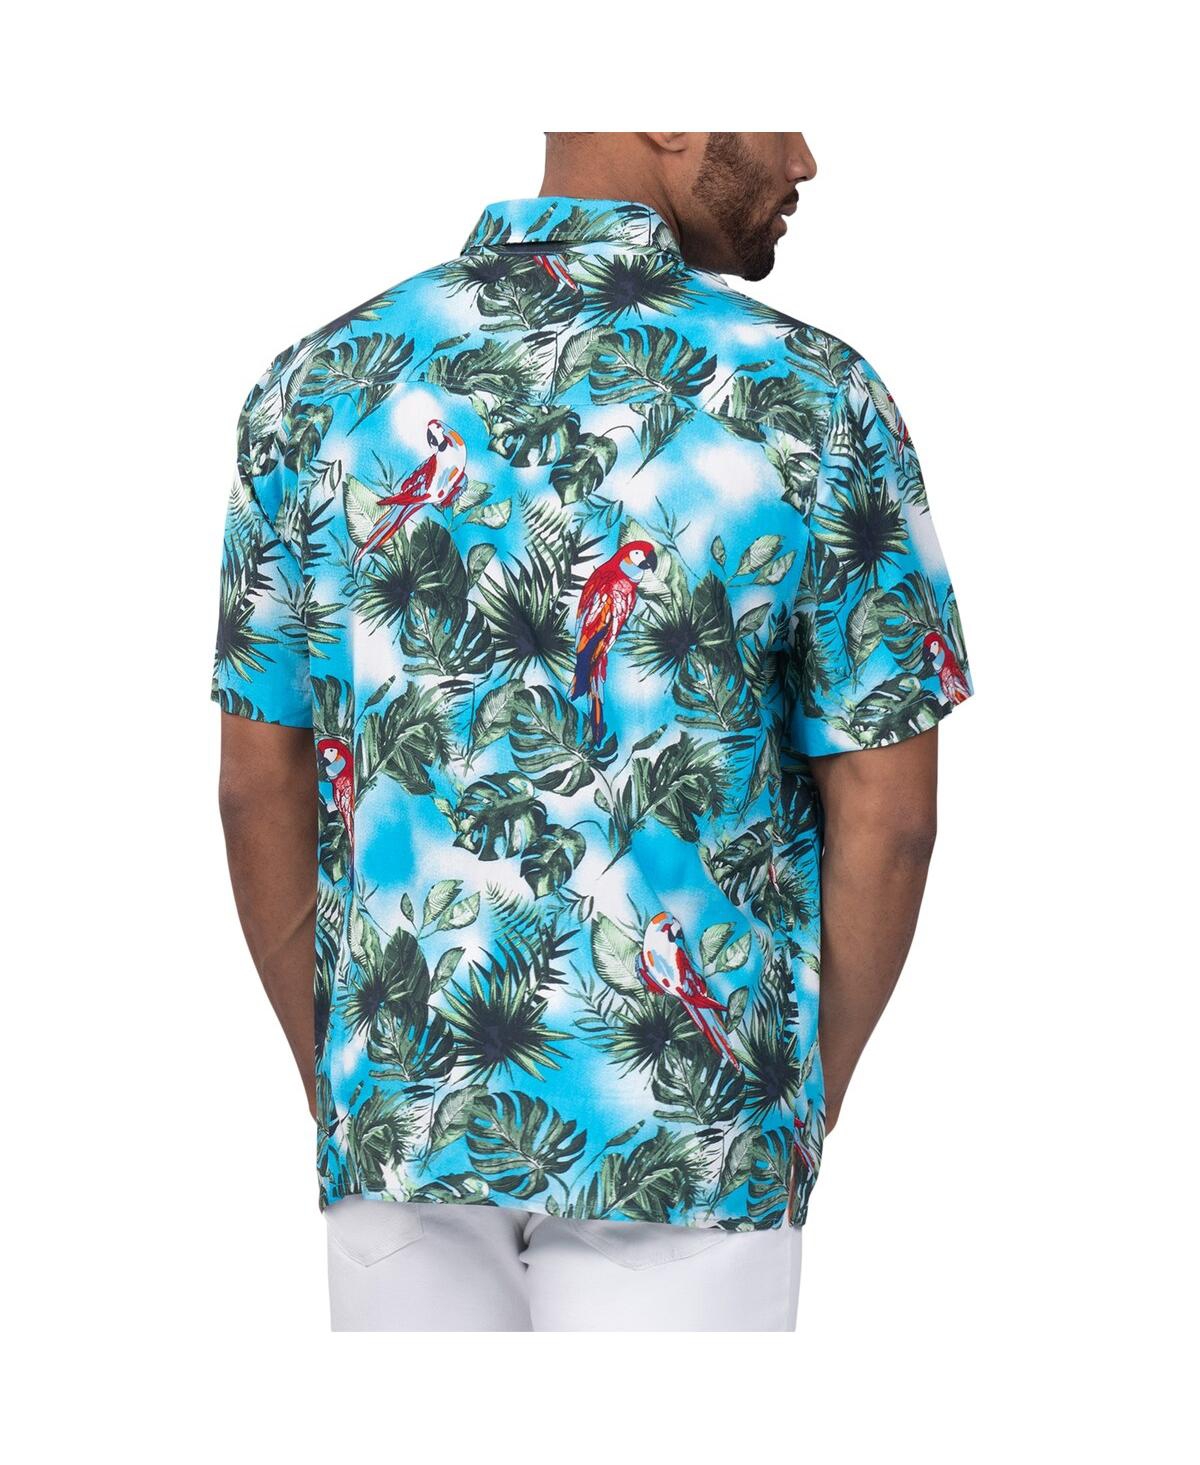 Shop Margaritaville Men's  Light Blue Cleveland Browns Jungle Parrot Party Button-up Shirt